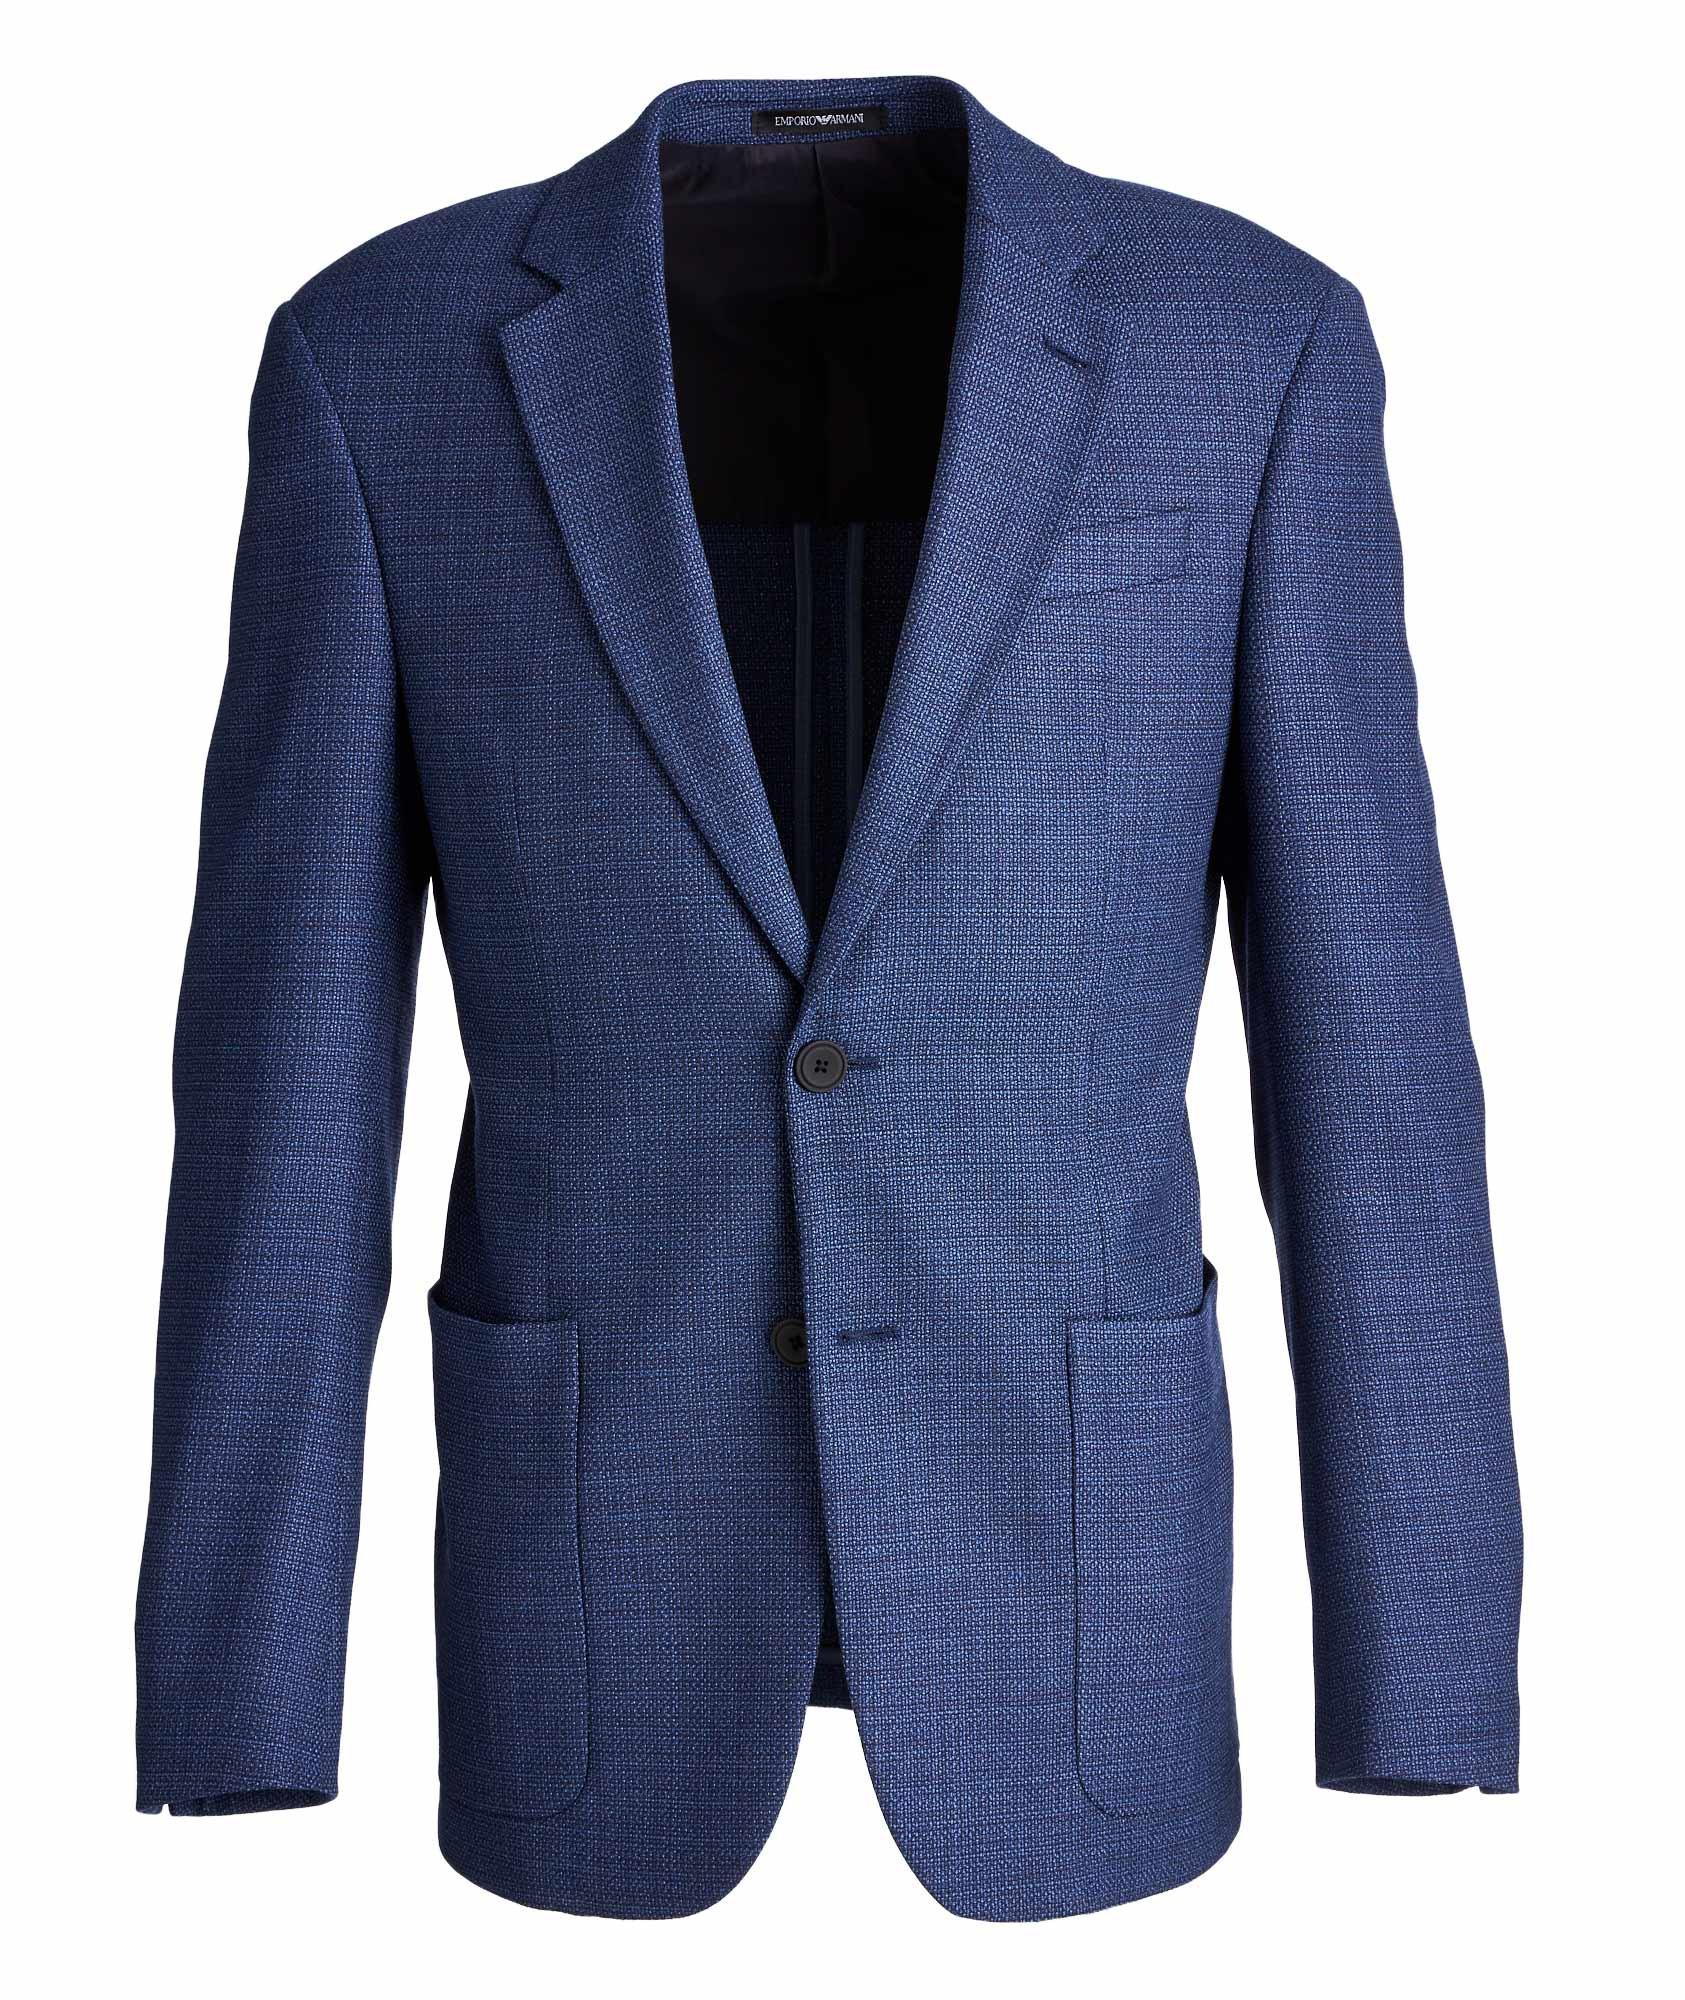 G-Line Deco Tweed Sports Jacket image 0